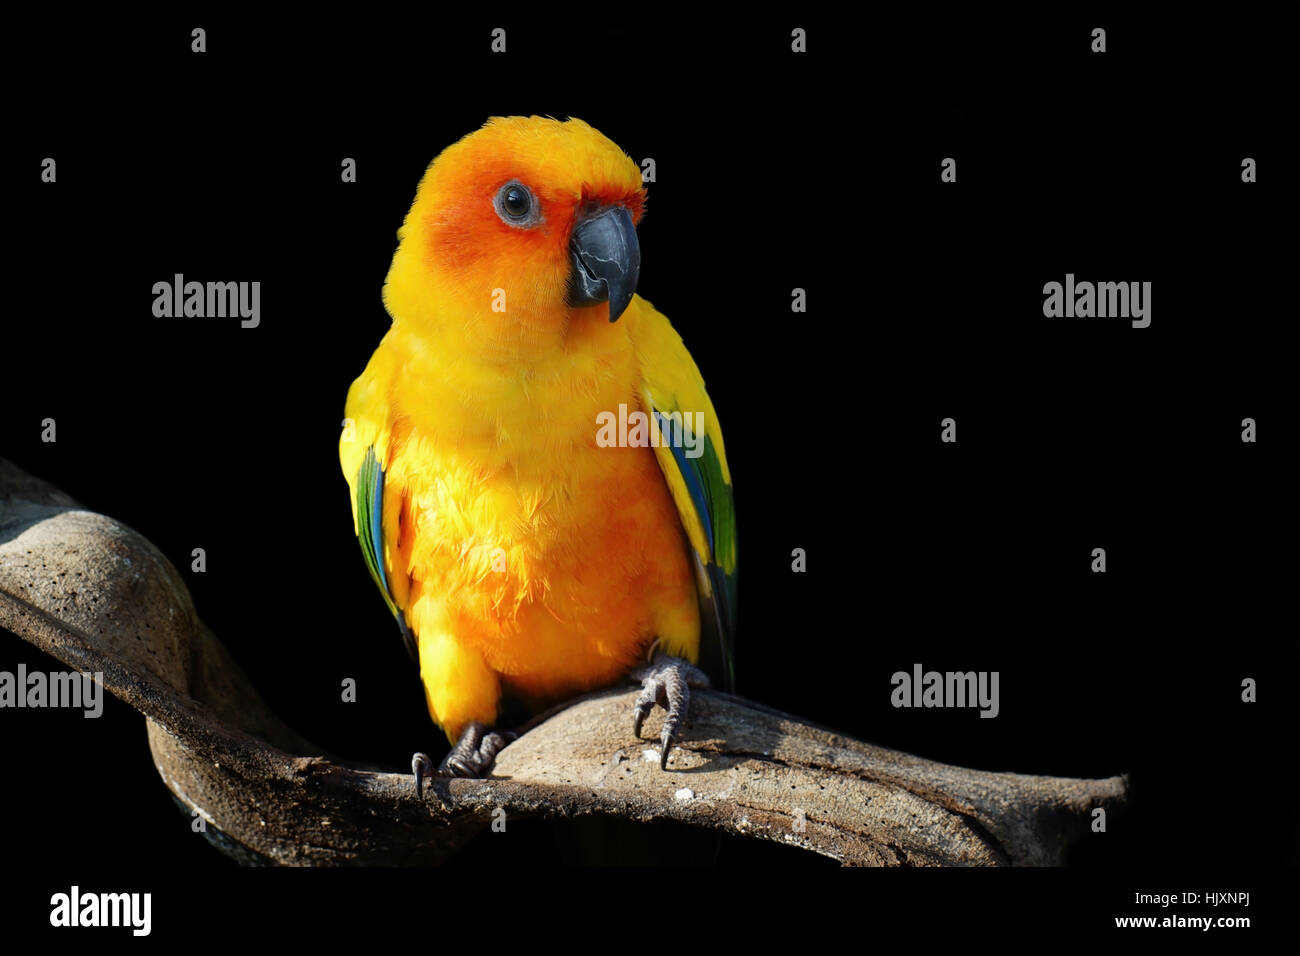 sun conure, beautiful yellow parrot bird isolated on black background Stock Photo